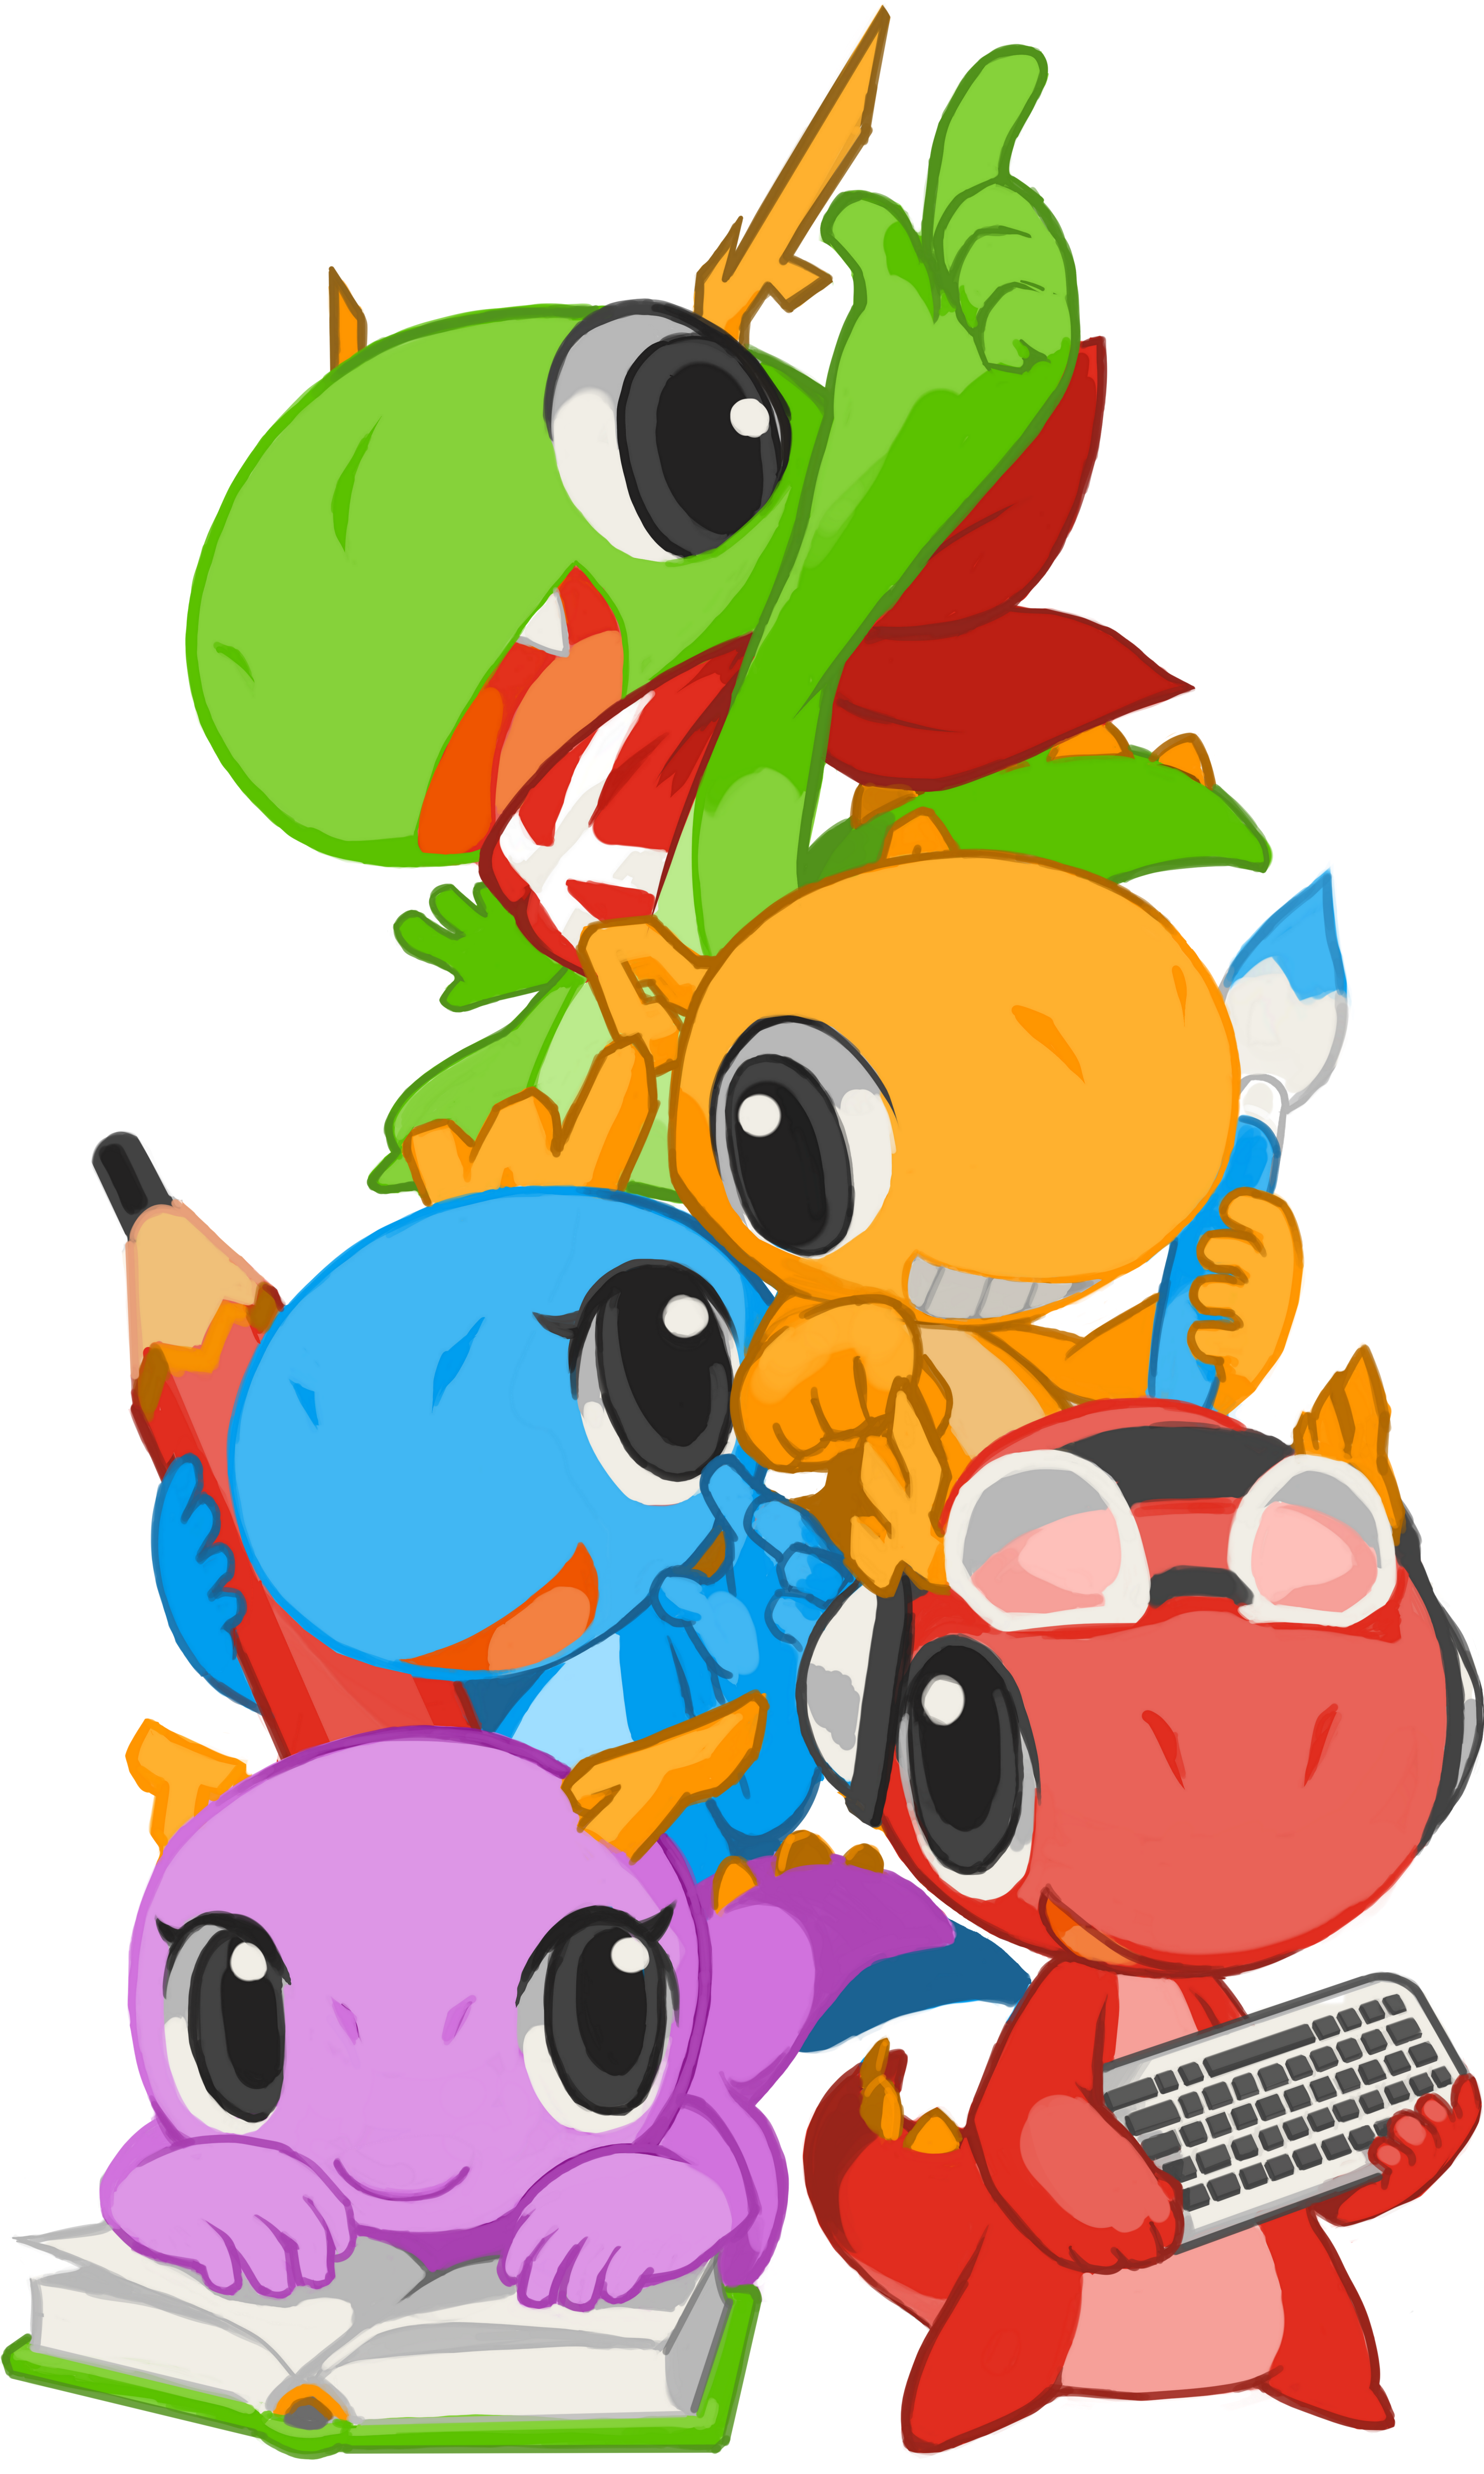 Konqi, the KDE mascot